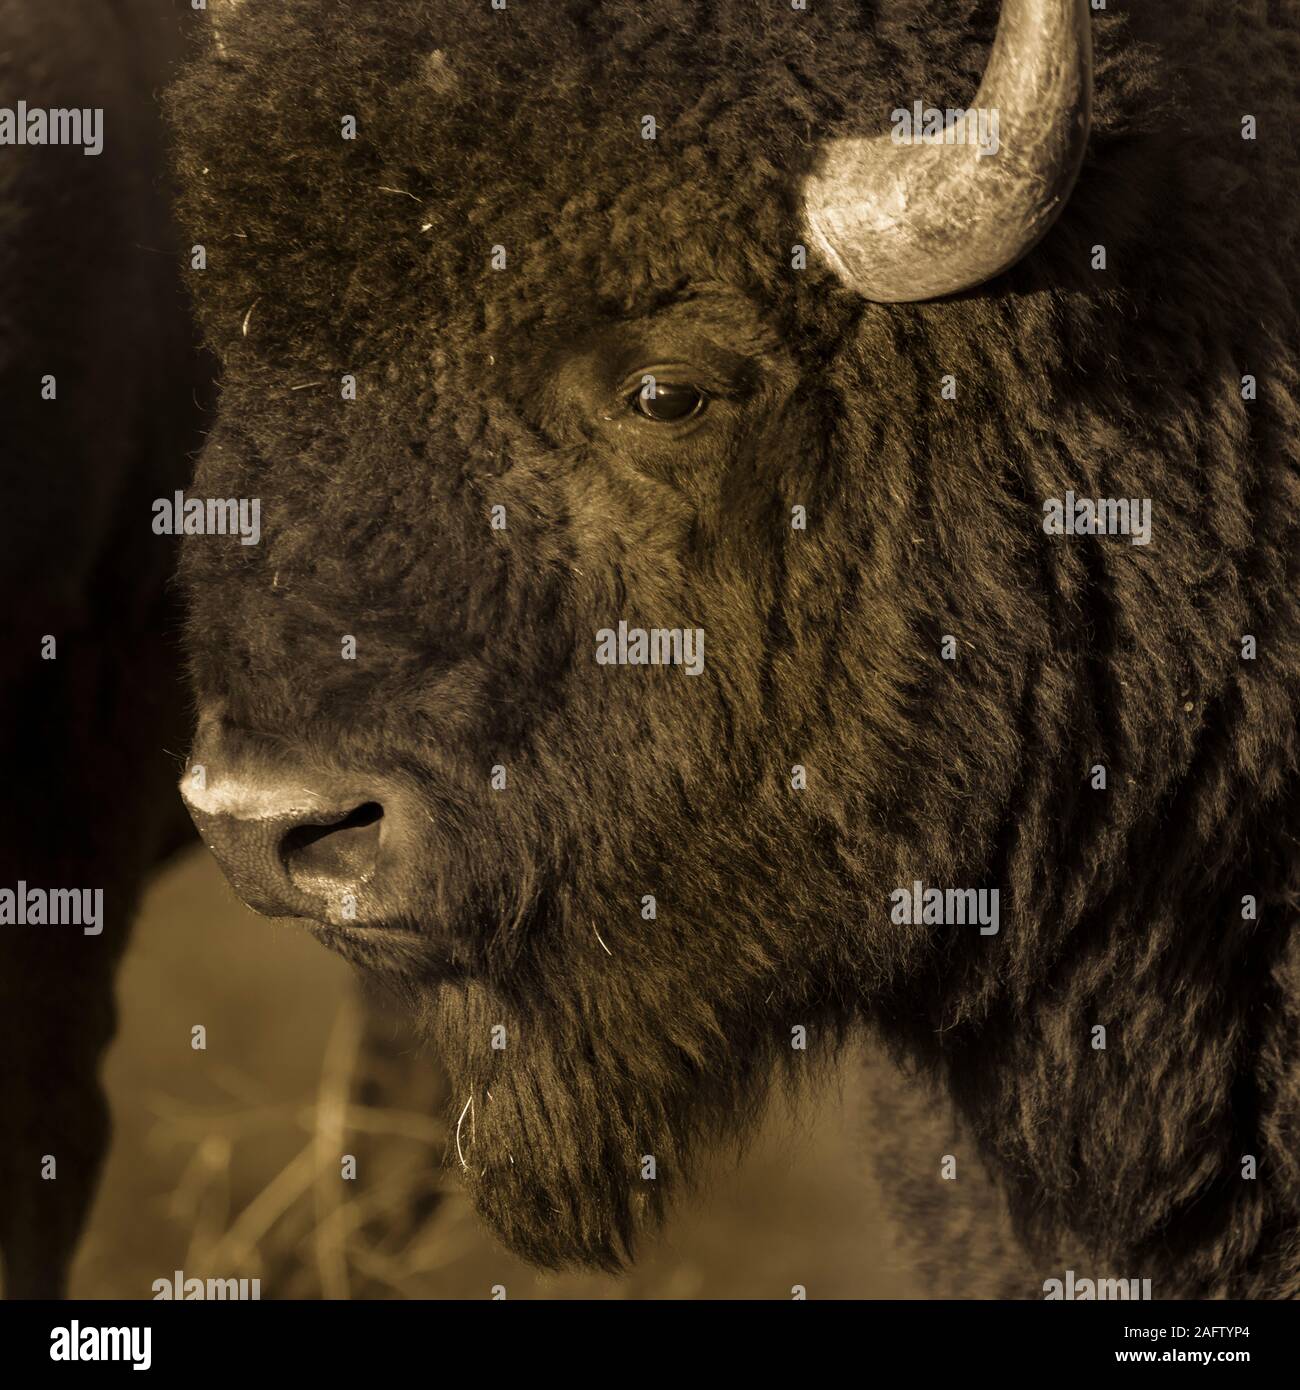 SEPTEMBER 24, 2019, CUSTER STATE PARK, SOUTH DAKOTA - Amerian  Bison known as Buffalo Stock Photo